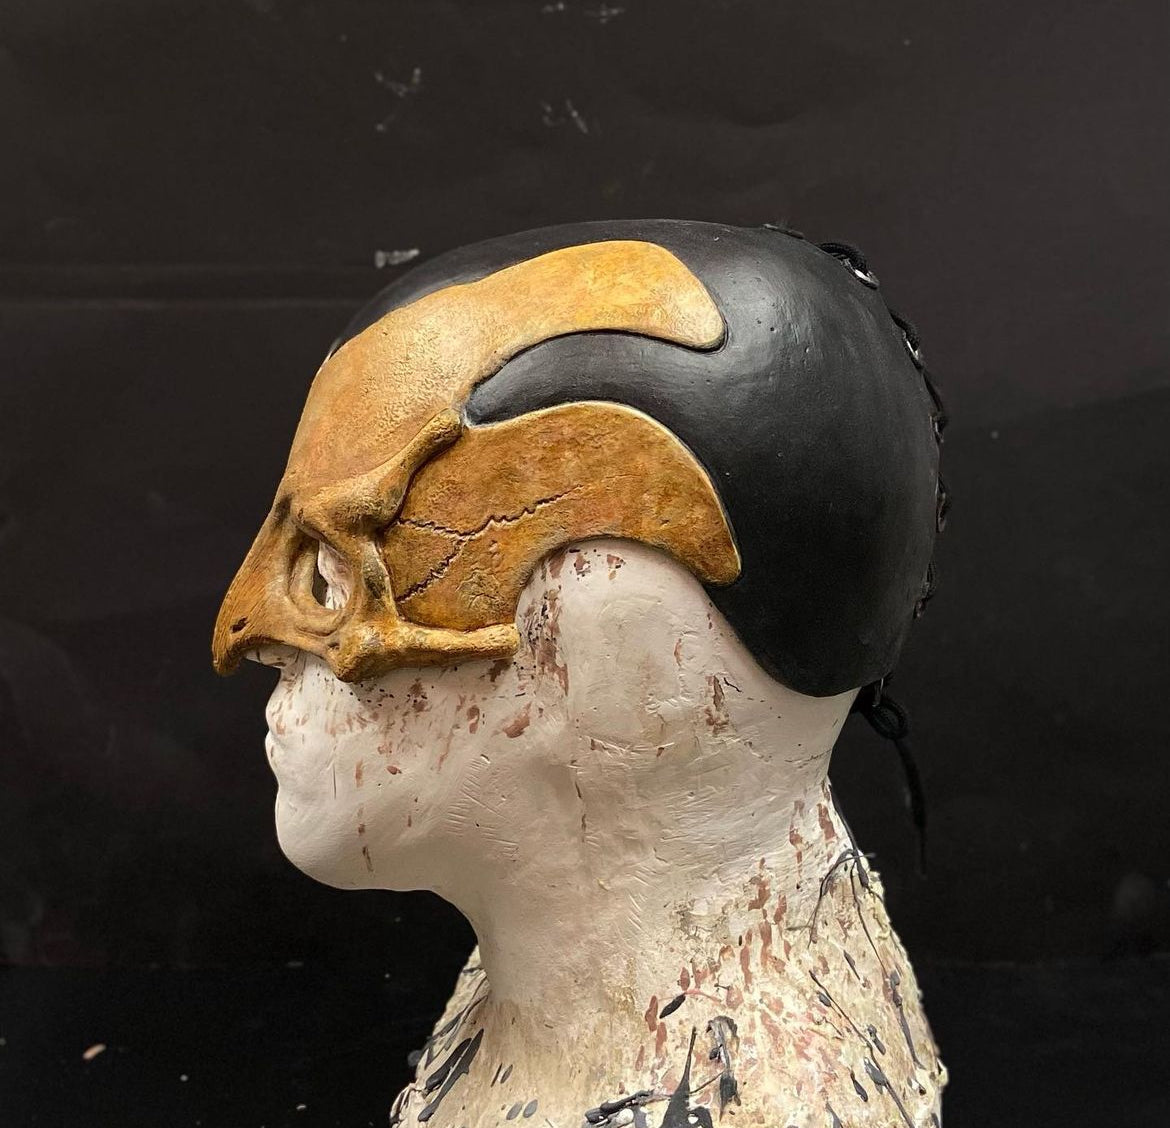 Bird-Man Mask